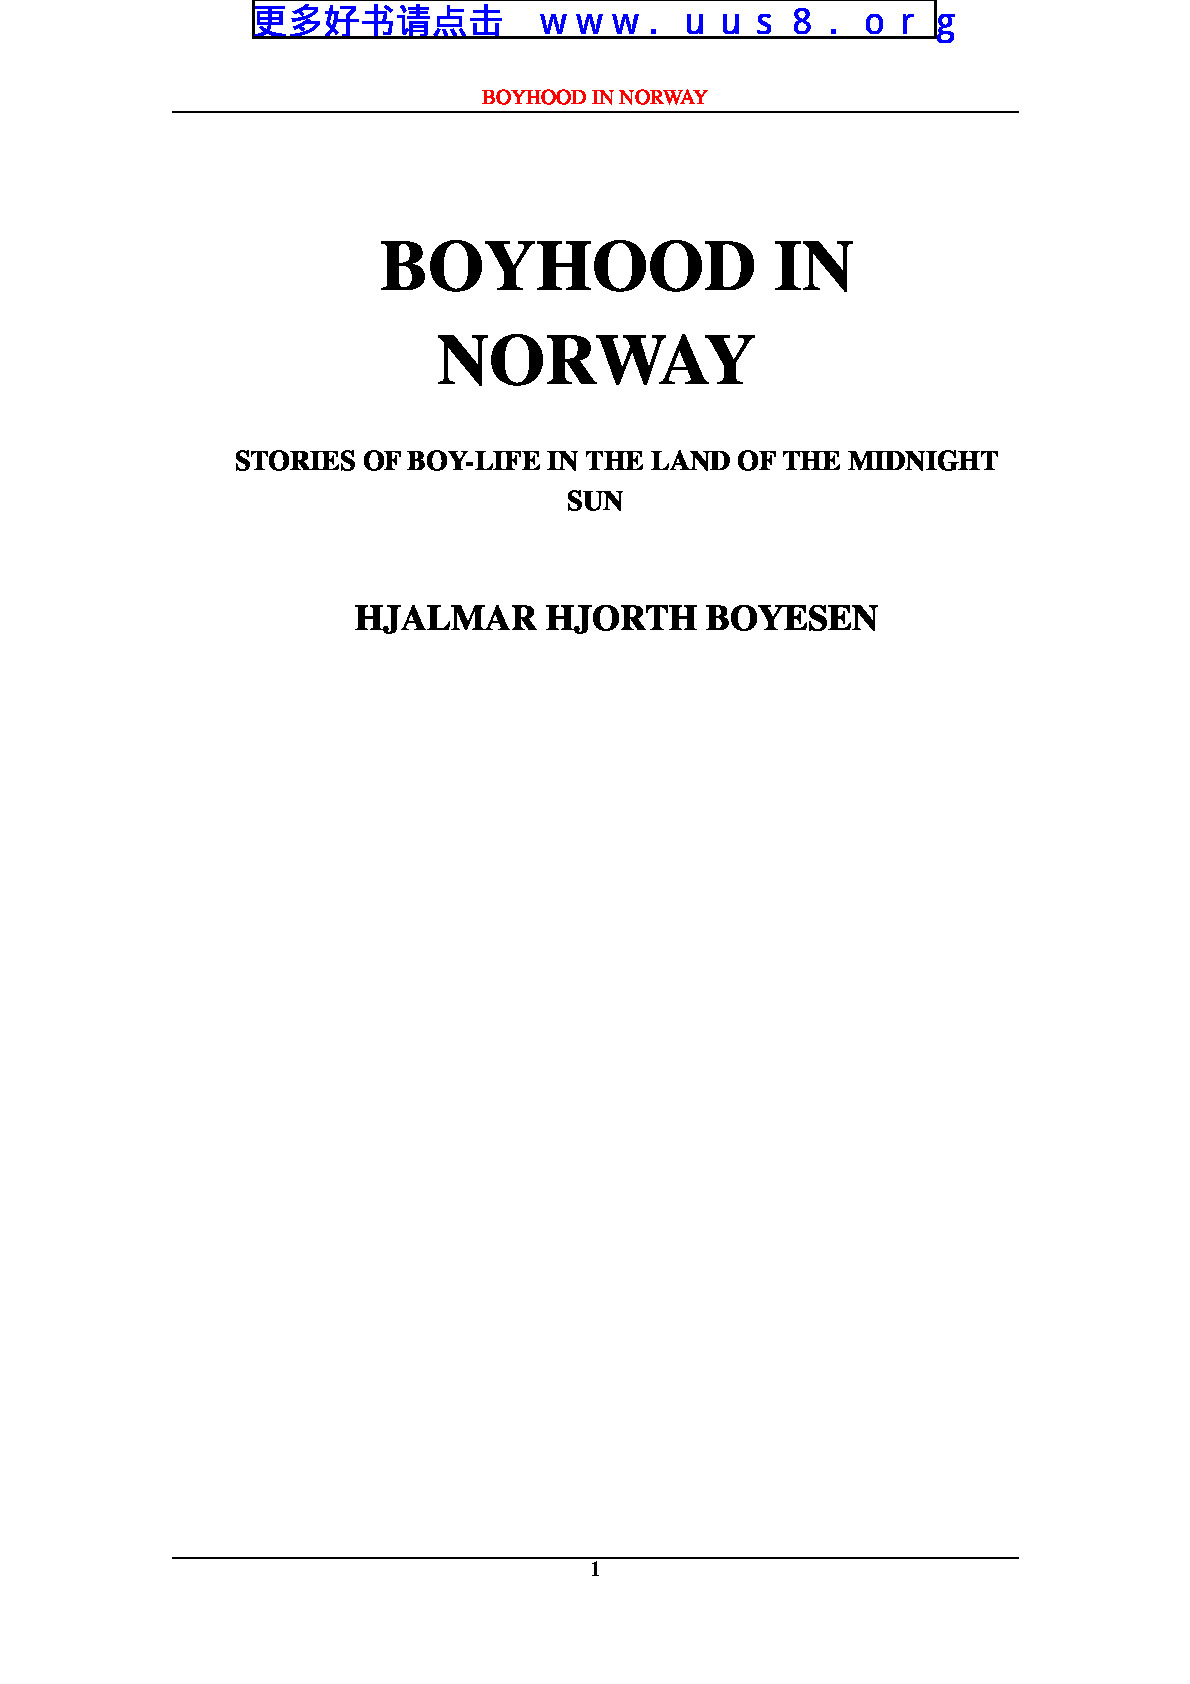 boyhood_in_norway(挪威孩提)